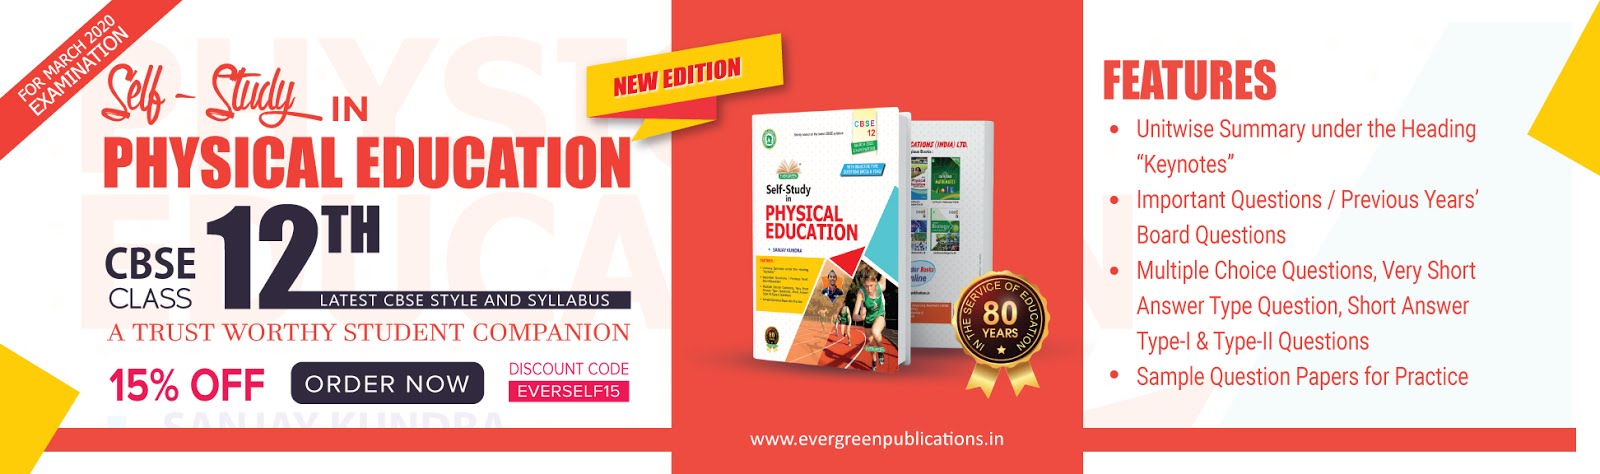 Evergreen Publications India